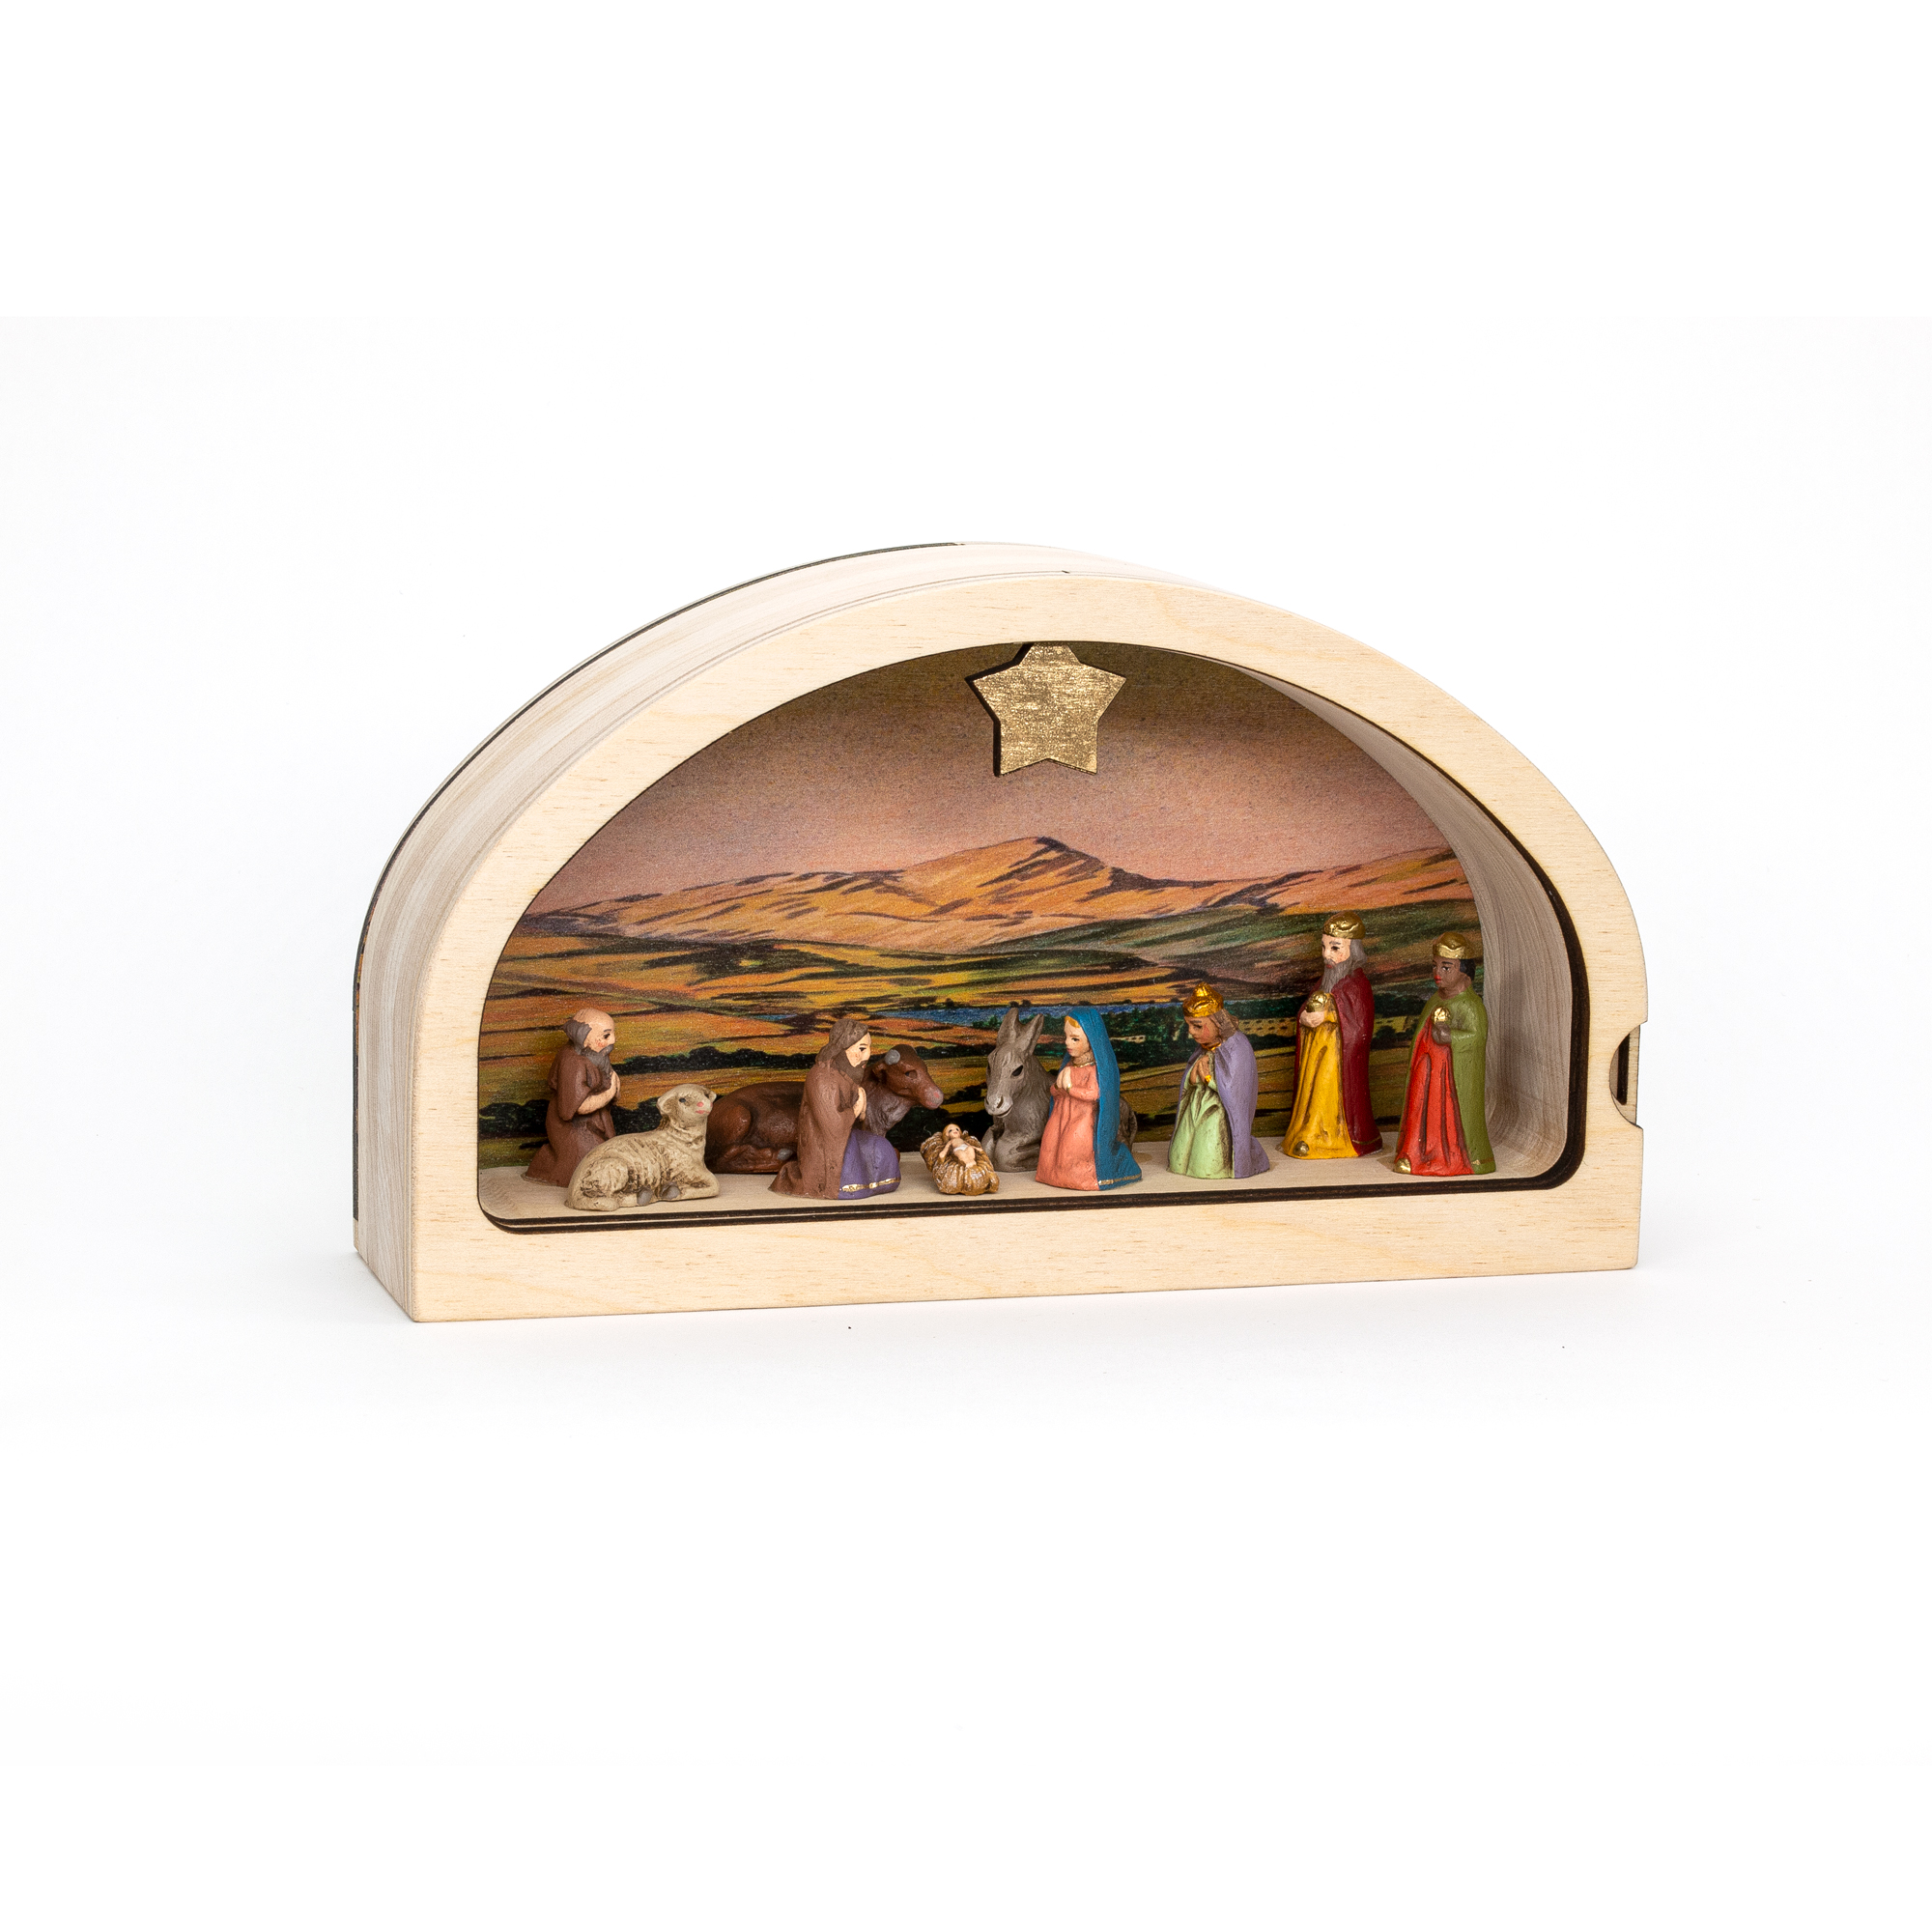 Miniature crib, nativity set, handmade in Germany